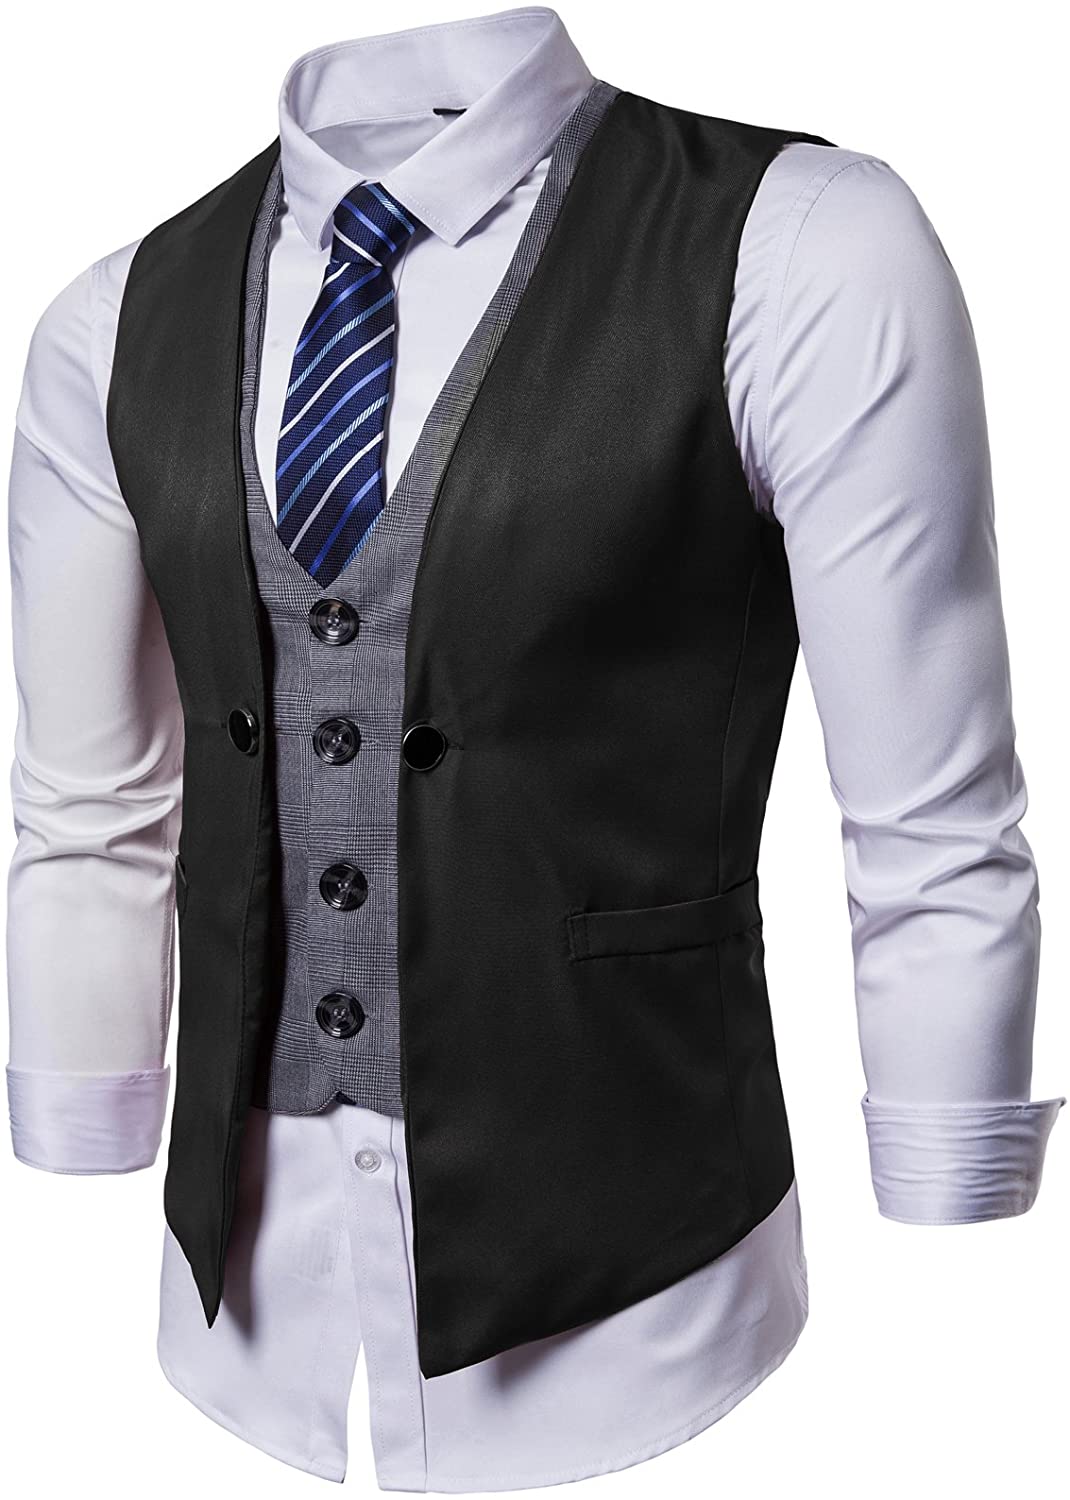 Details about   Men's Formal Vest Striped Adjustable Suit Vest Snooker Bowling Billiards players